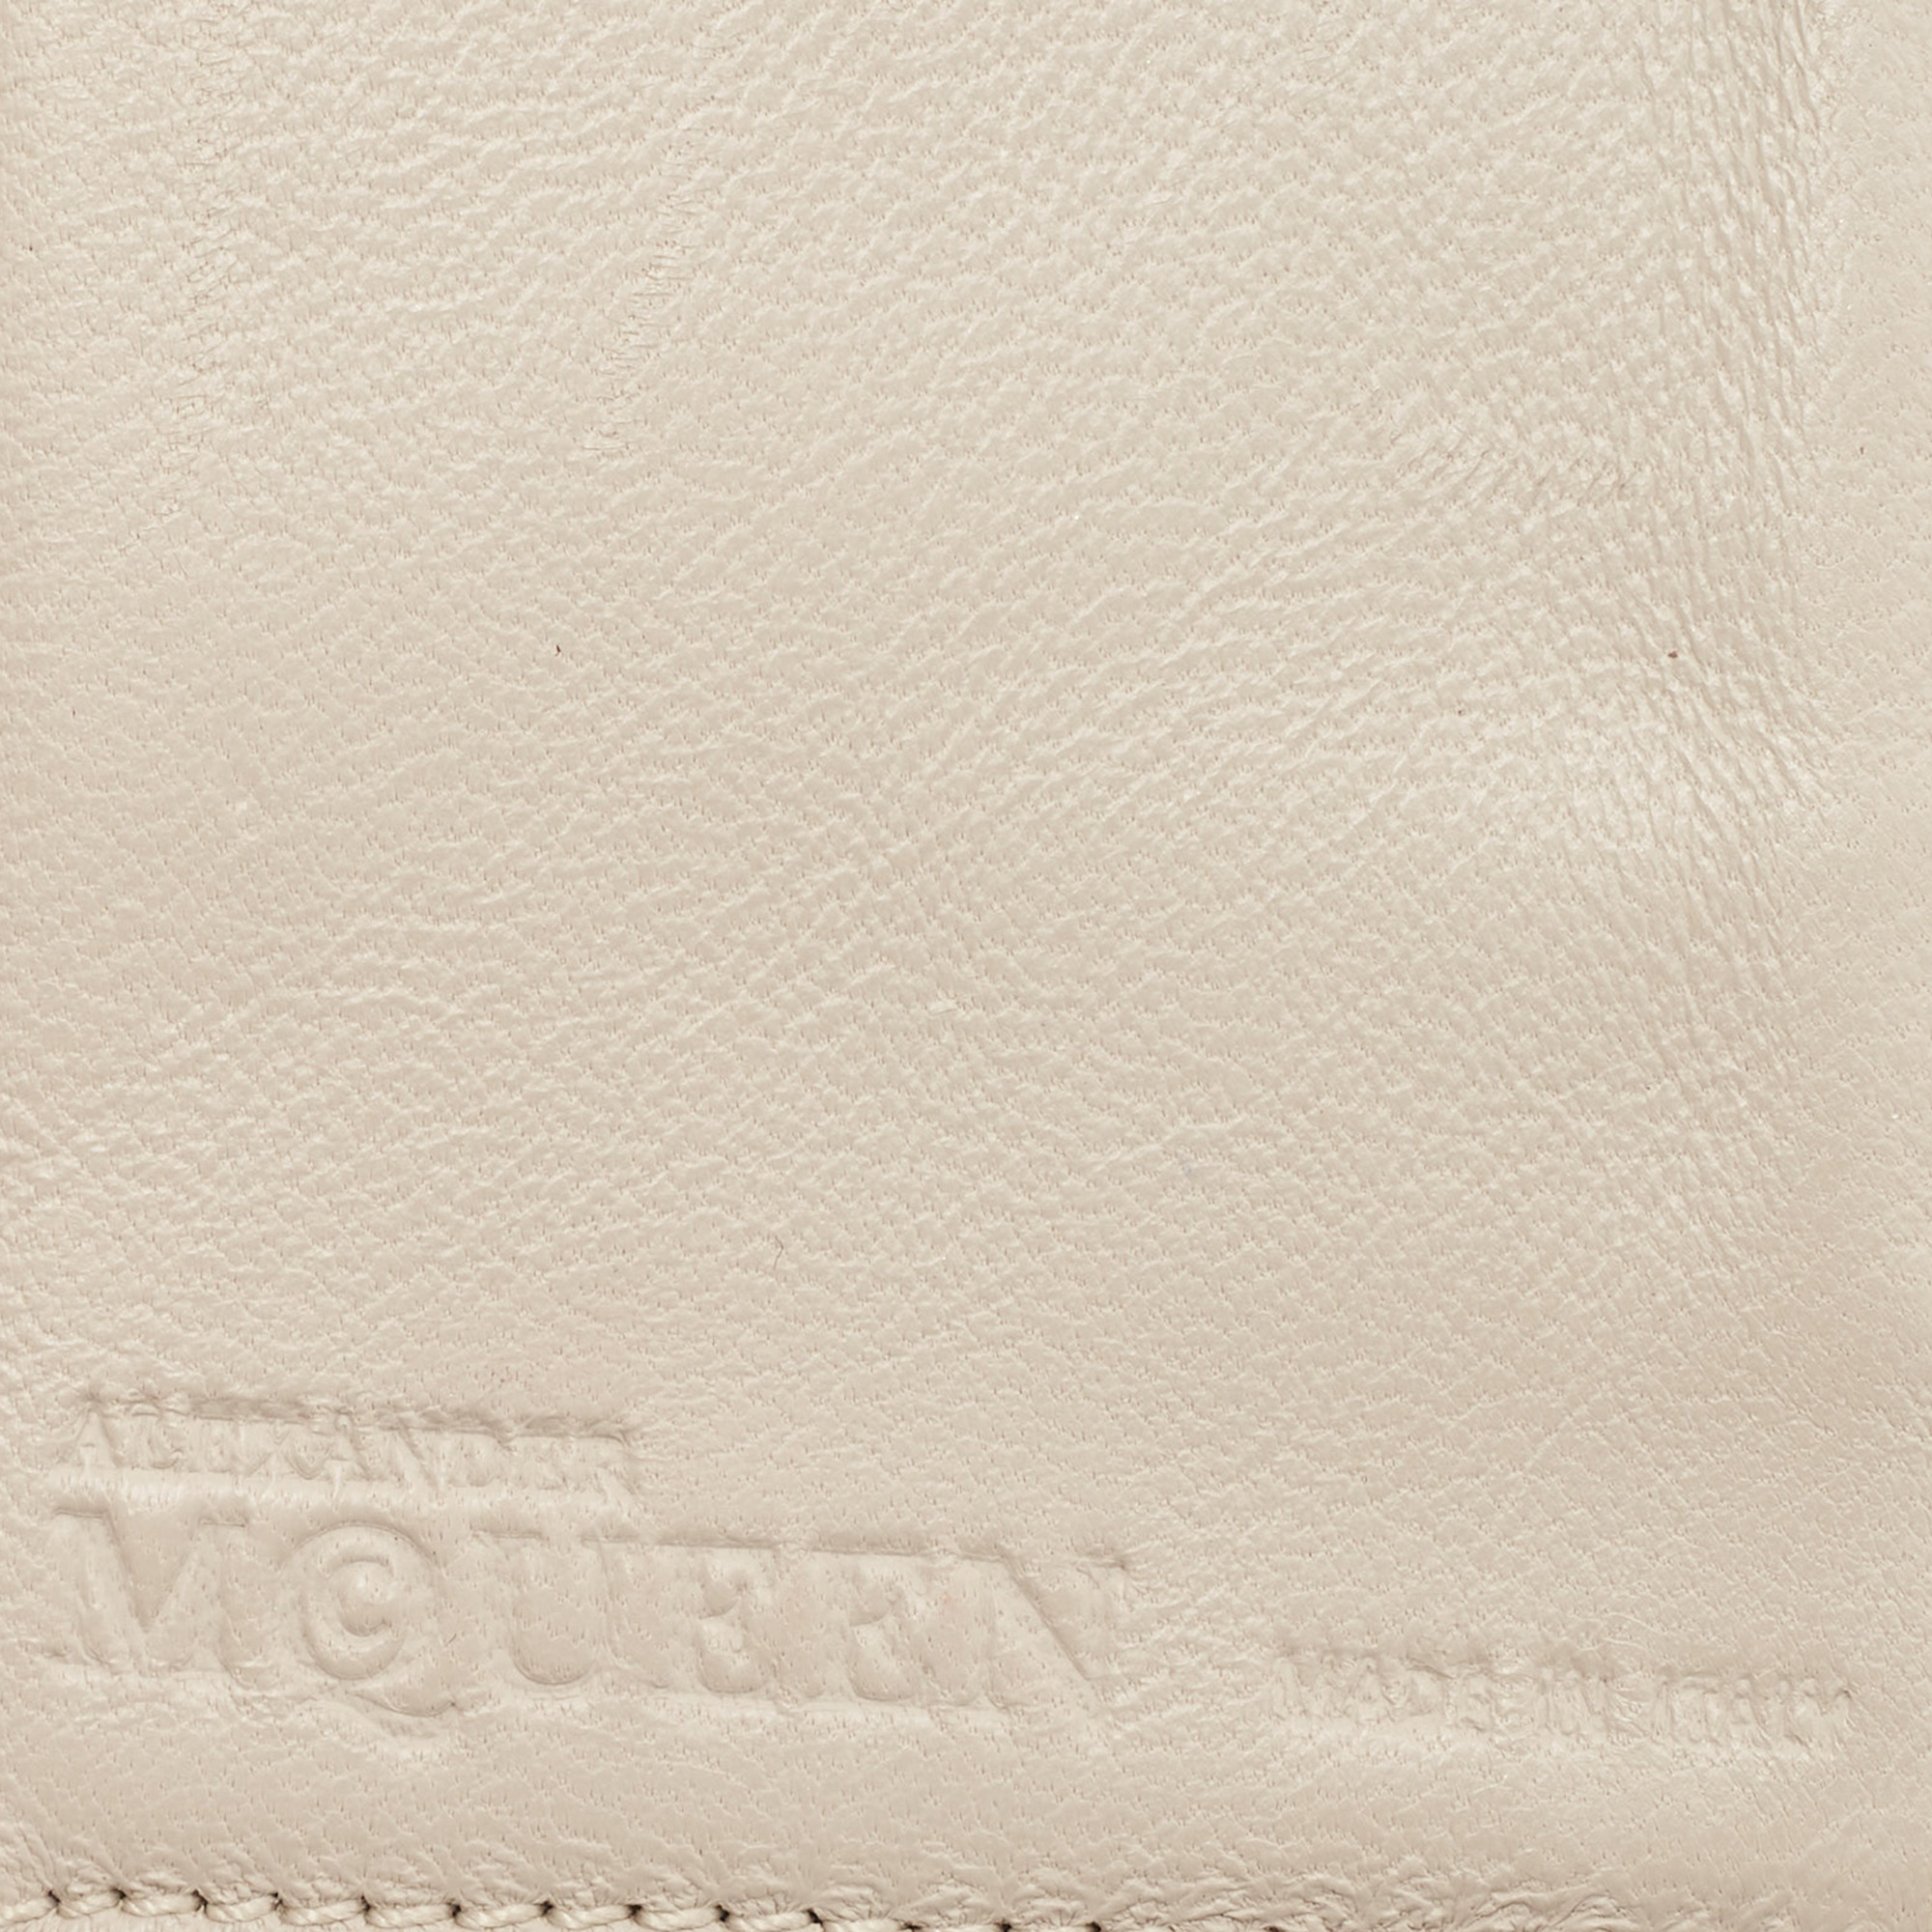 Alexander McQueen Grey Leather Skull Continental Wallet